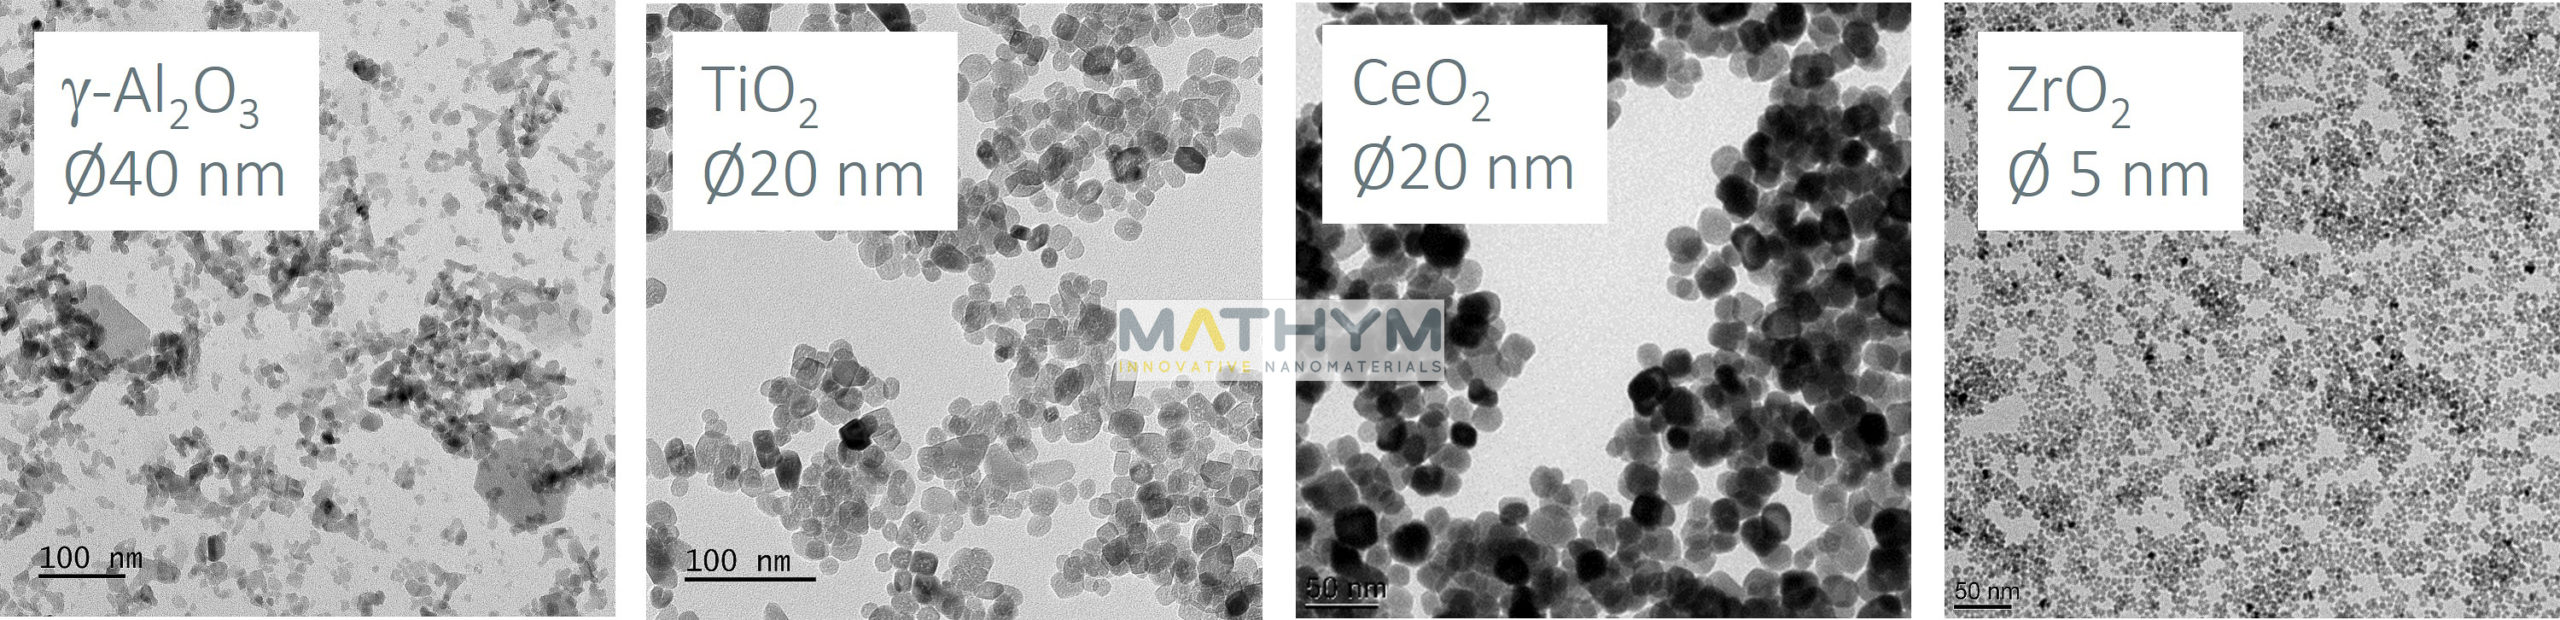 Mathym Nanoparticles dispersed Al2O3, TiO2, CeO2, ZrO2